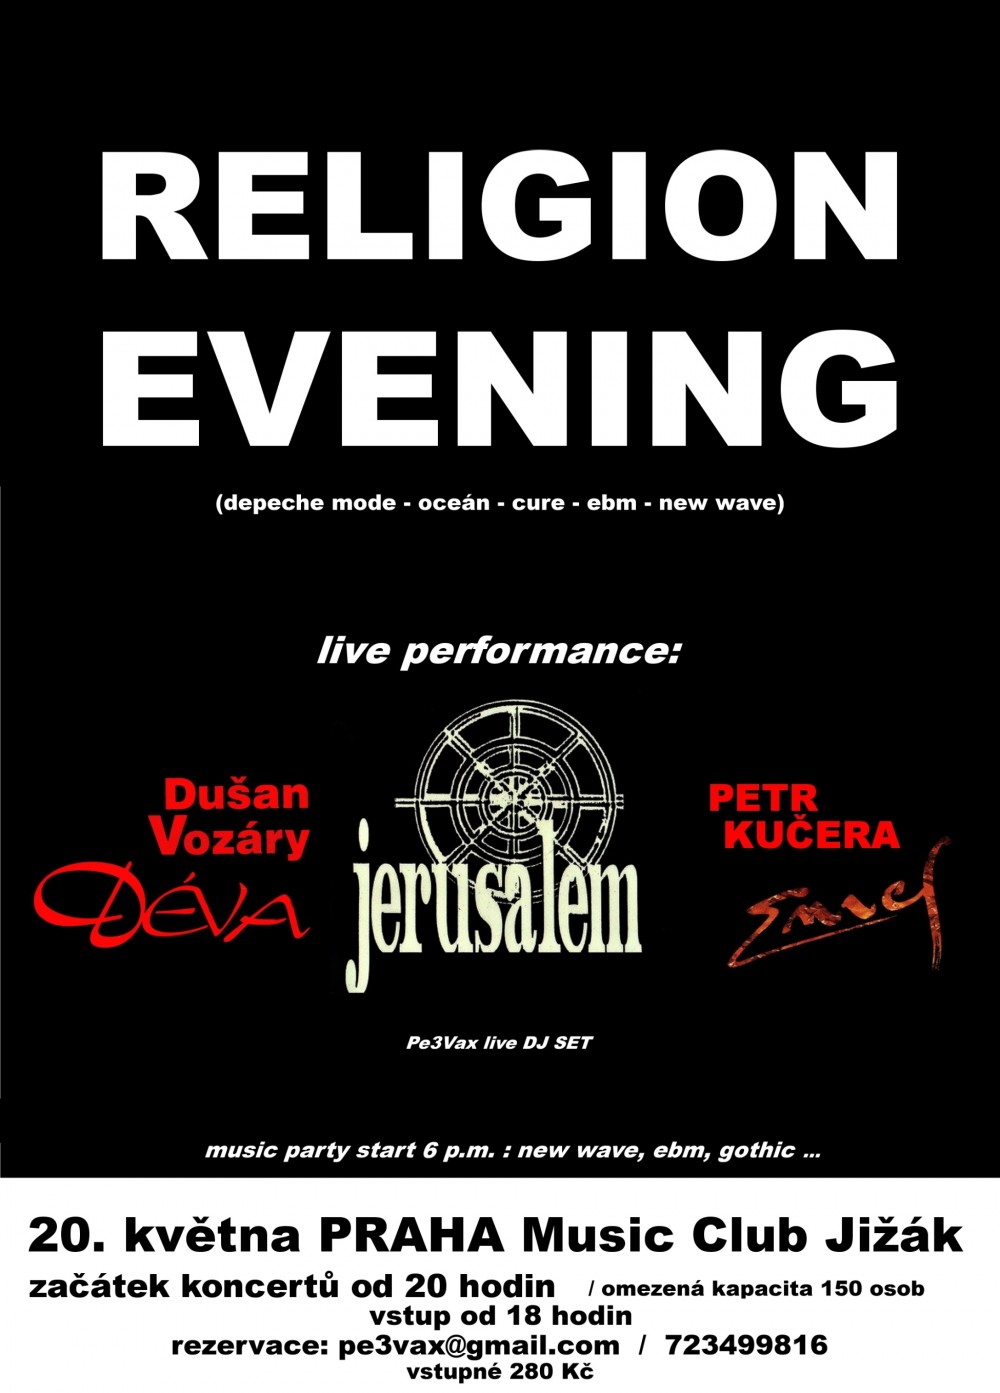 Plagát akcie: Religion Evening